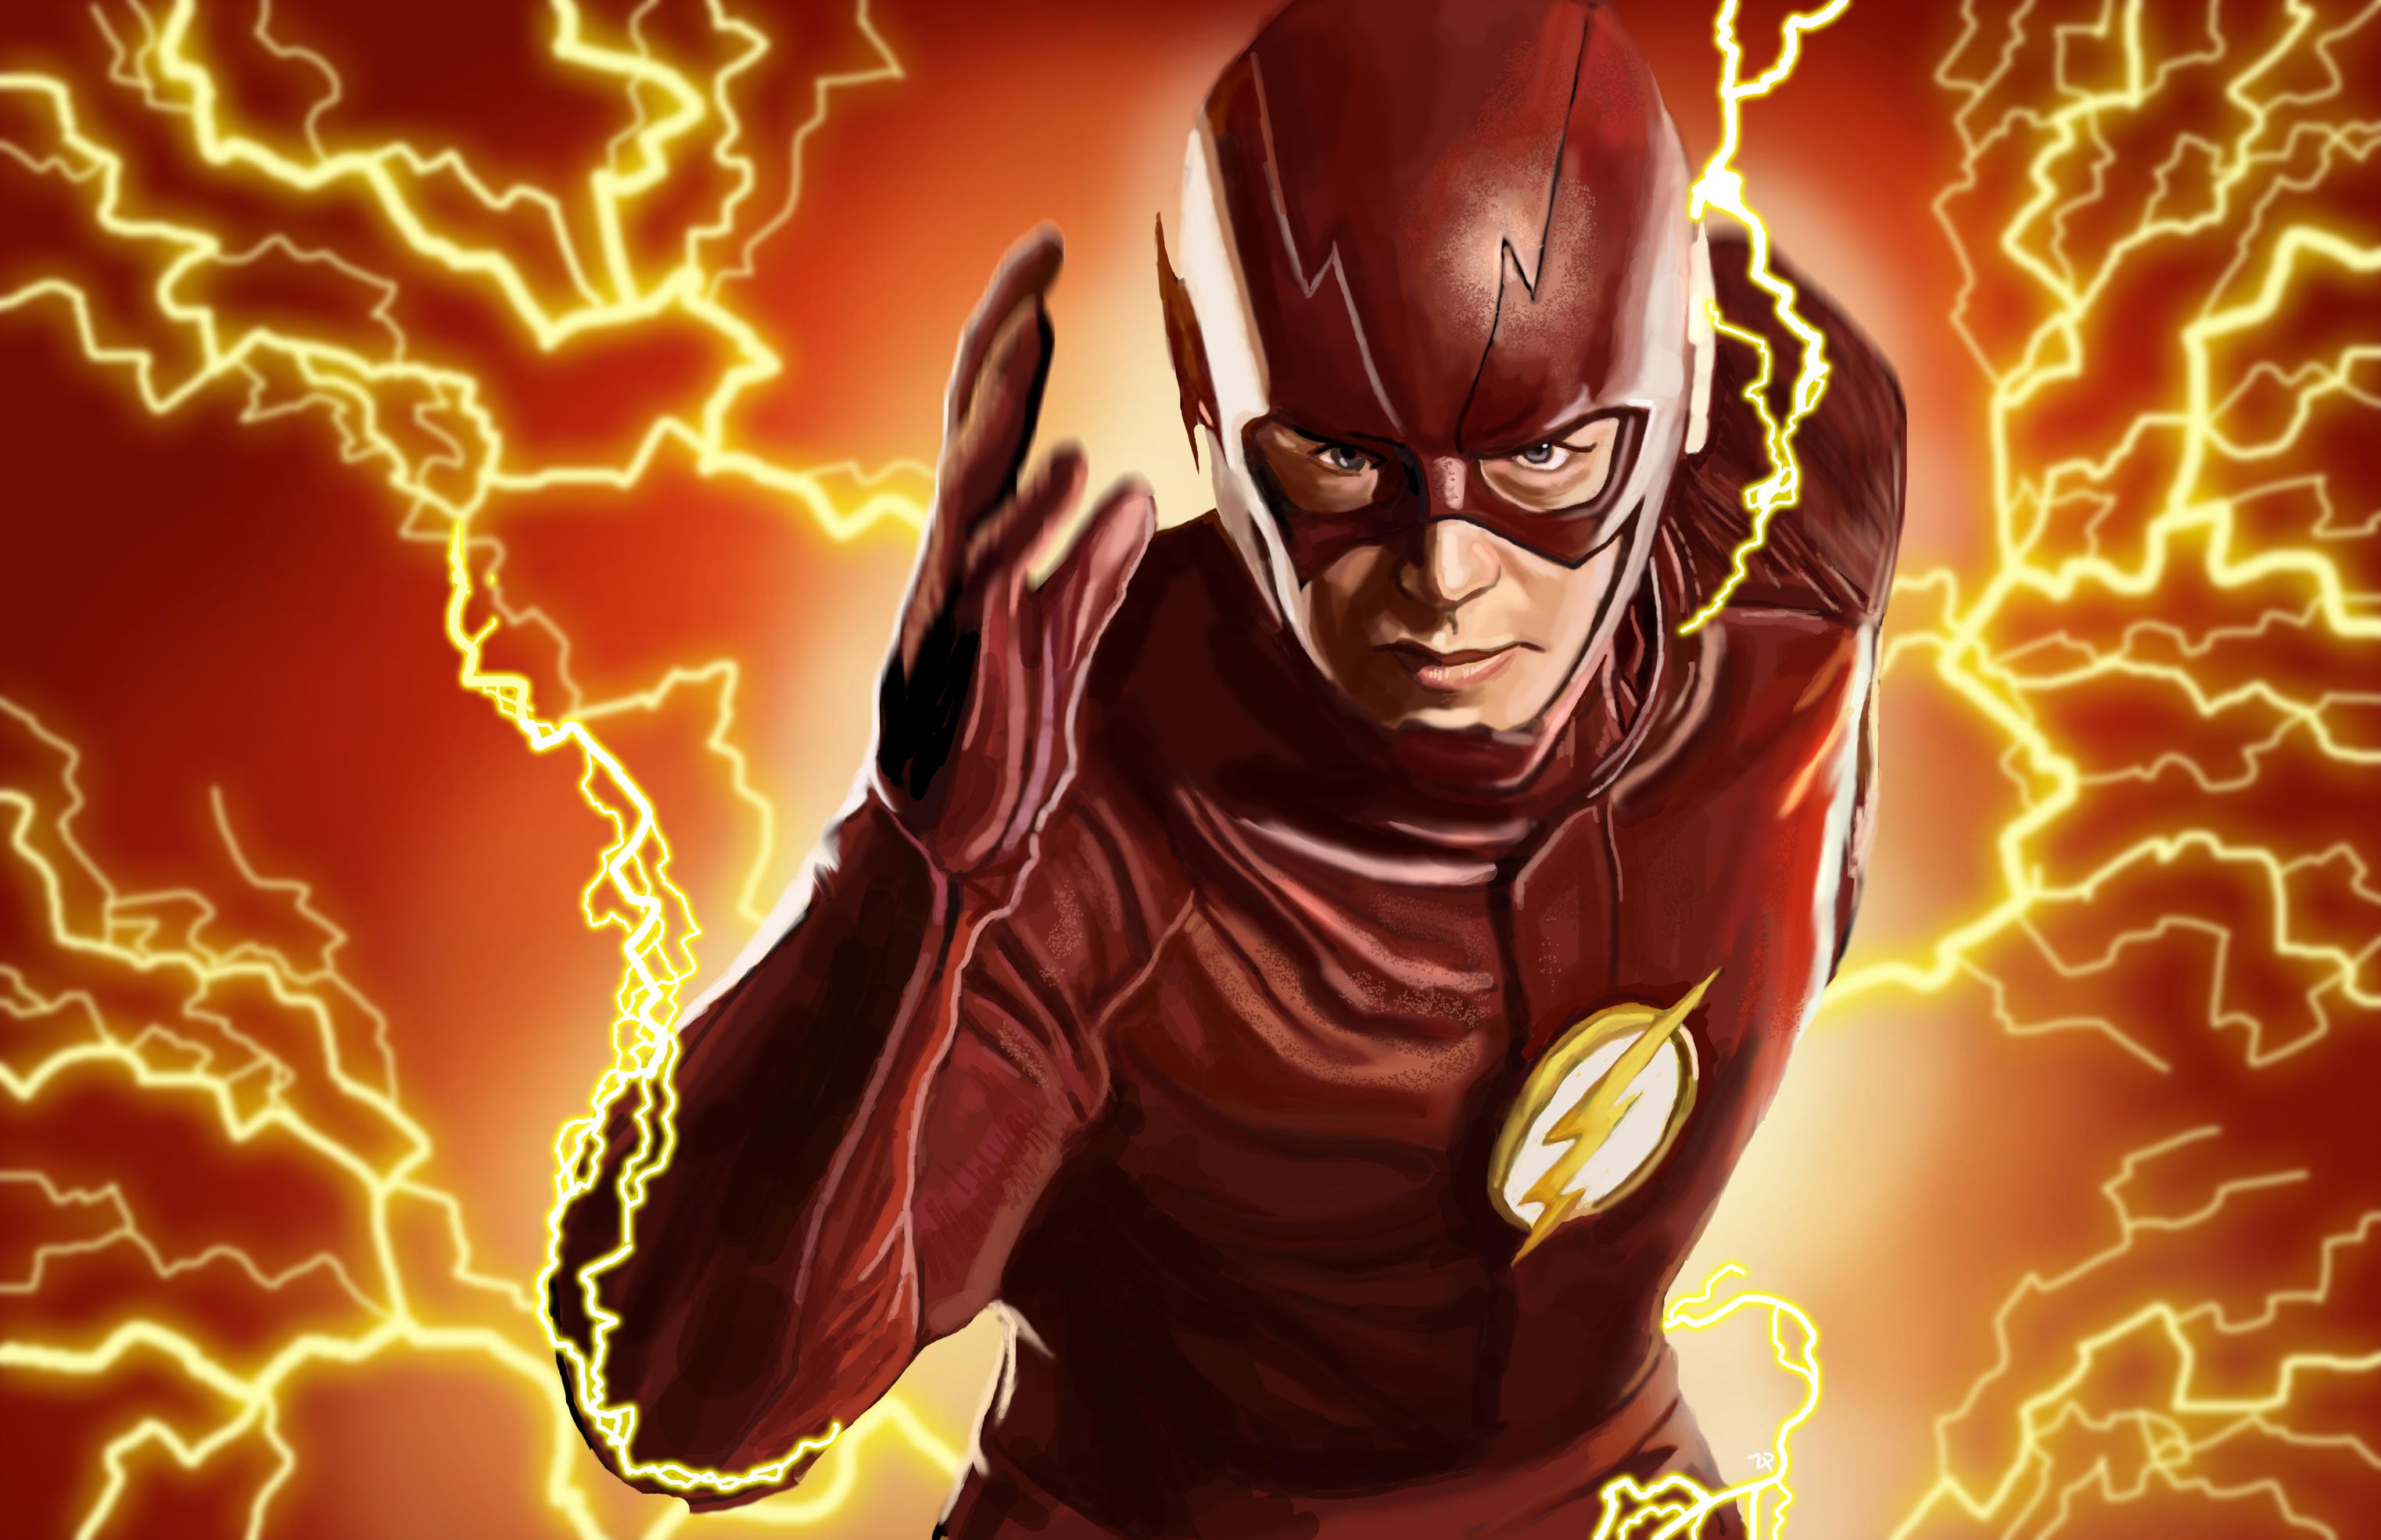 Flash rar. Барри Аллен ДС. Флэш (DC Comics). Барри Аллен аватар. Barry Allen Flash.